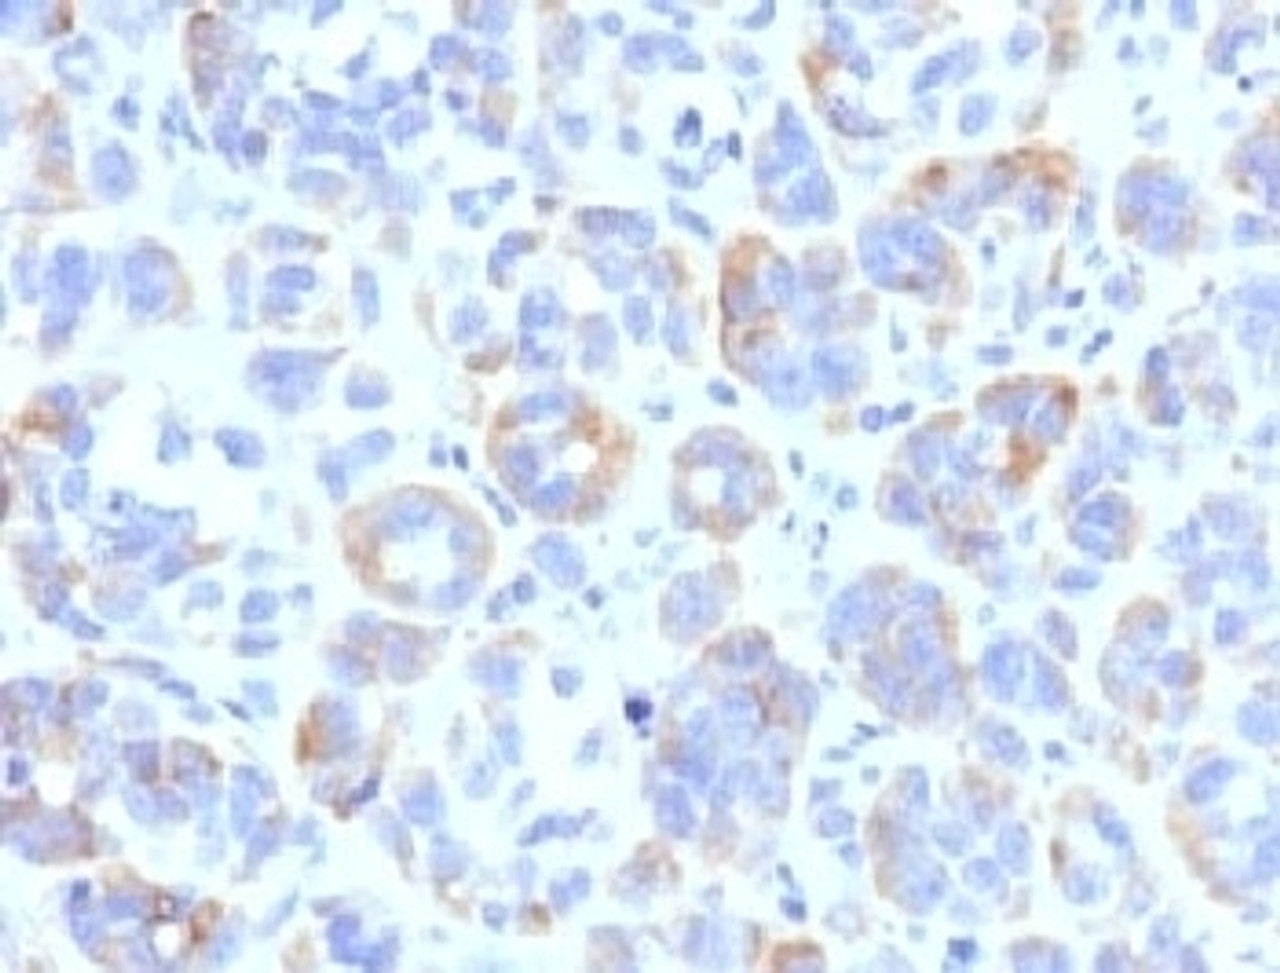 IHC testing of FFPE human melanoma with TRP1 antibody (clone TYRR1-1)